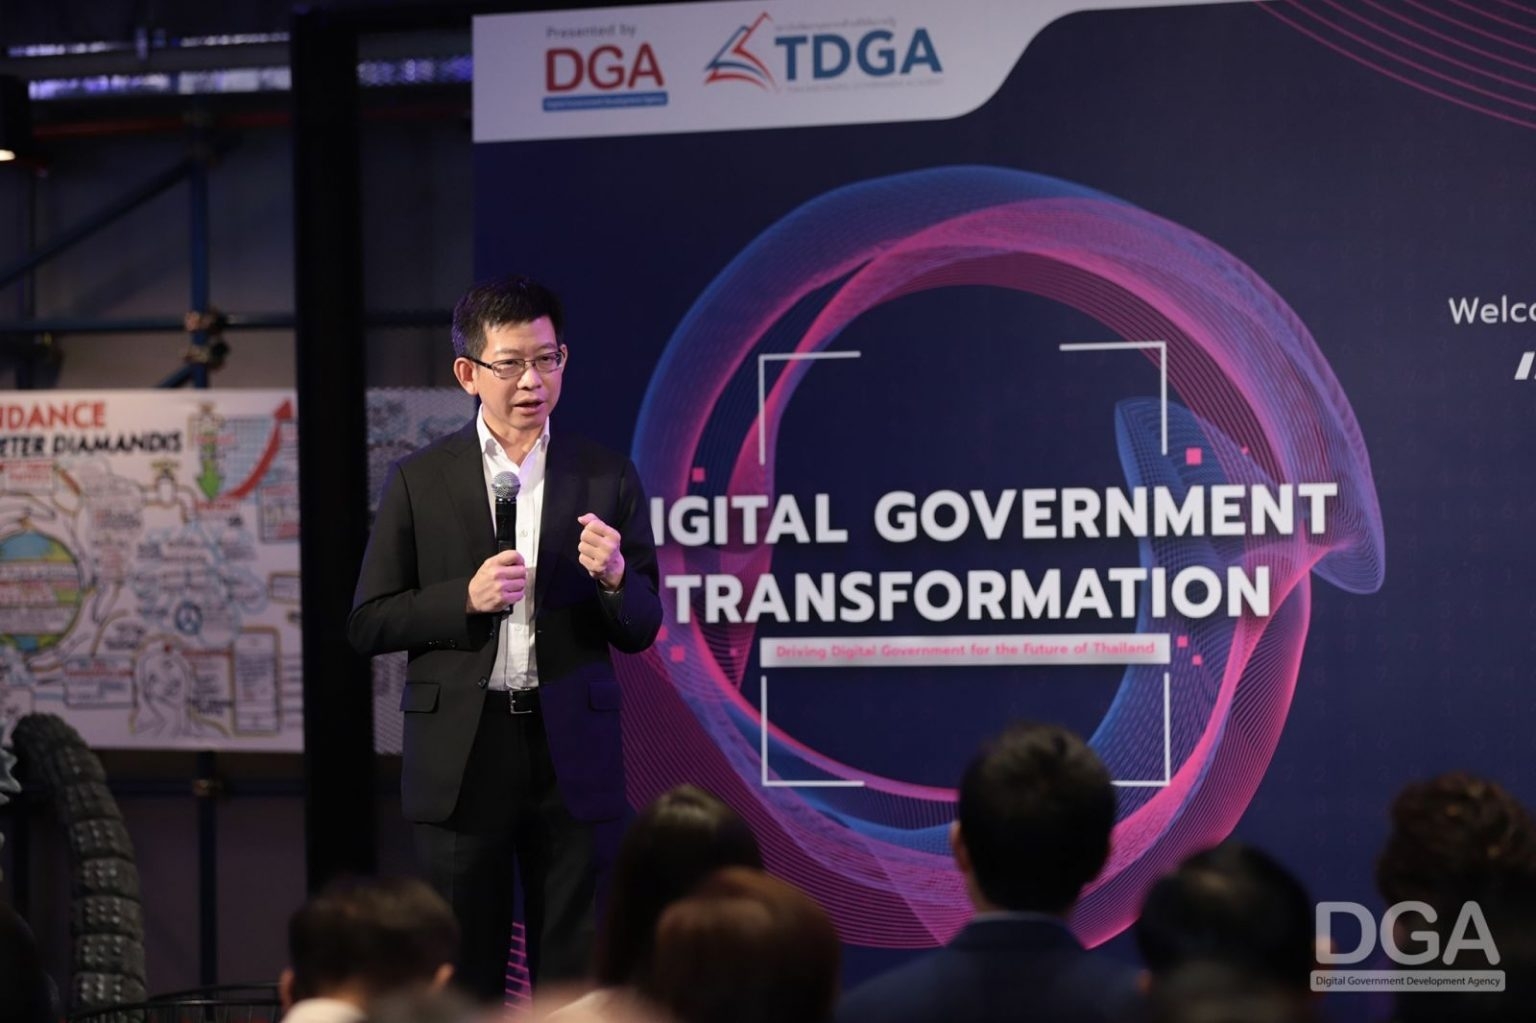 DGA ร่วมกับบริษัท อนันดา ดีเวลลอปเม้นท์ จำกัด (มหาชน) และสมาคม ACIOA จัดงาน Dinner Talk: Digital Government Transformation “Driving Digital Government for The Future of Thailand” 